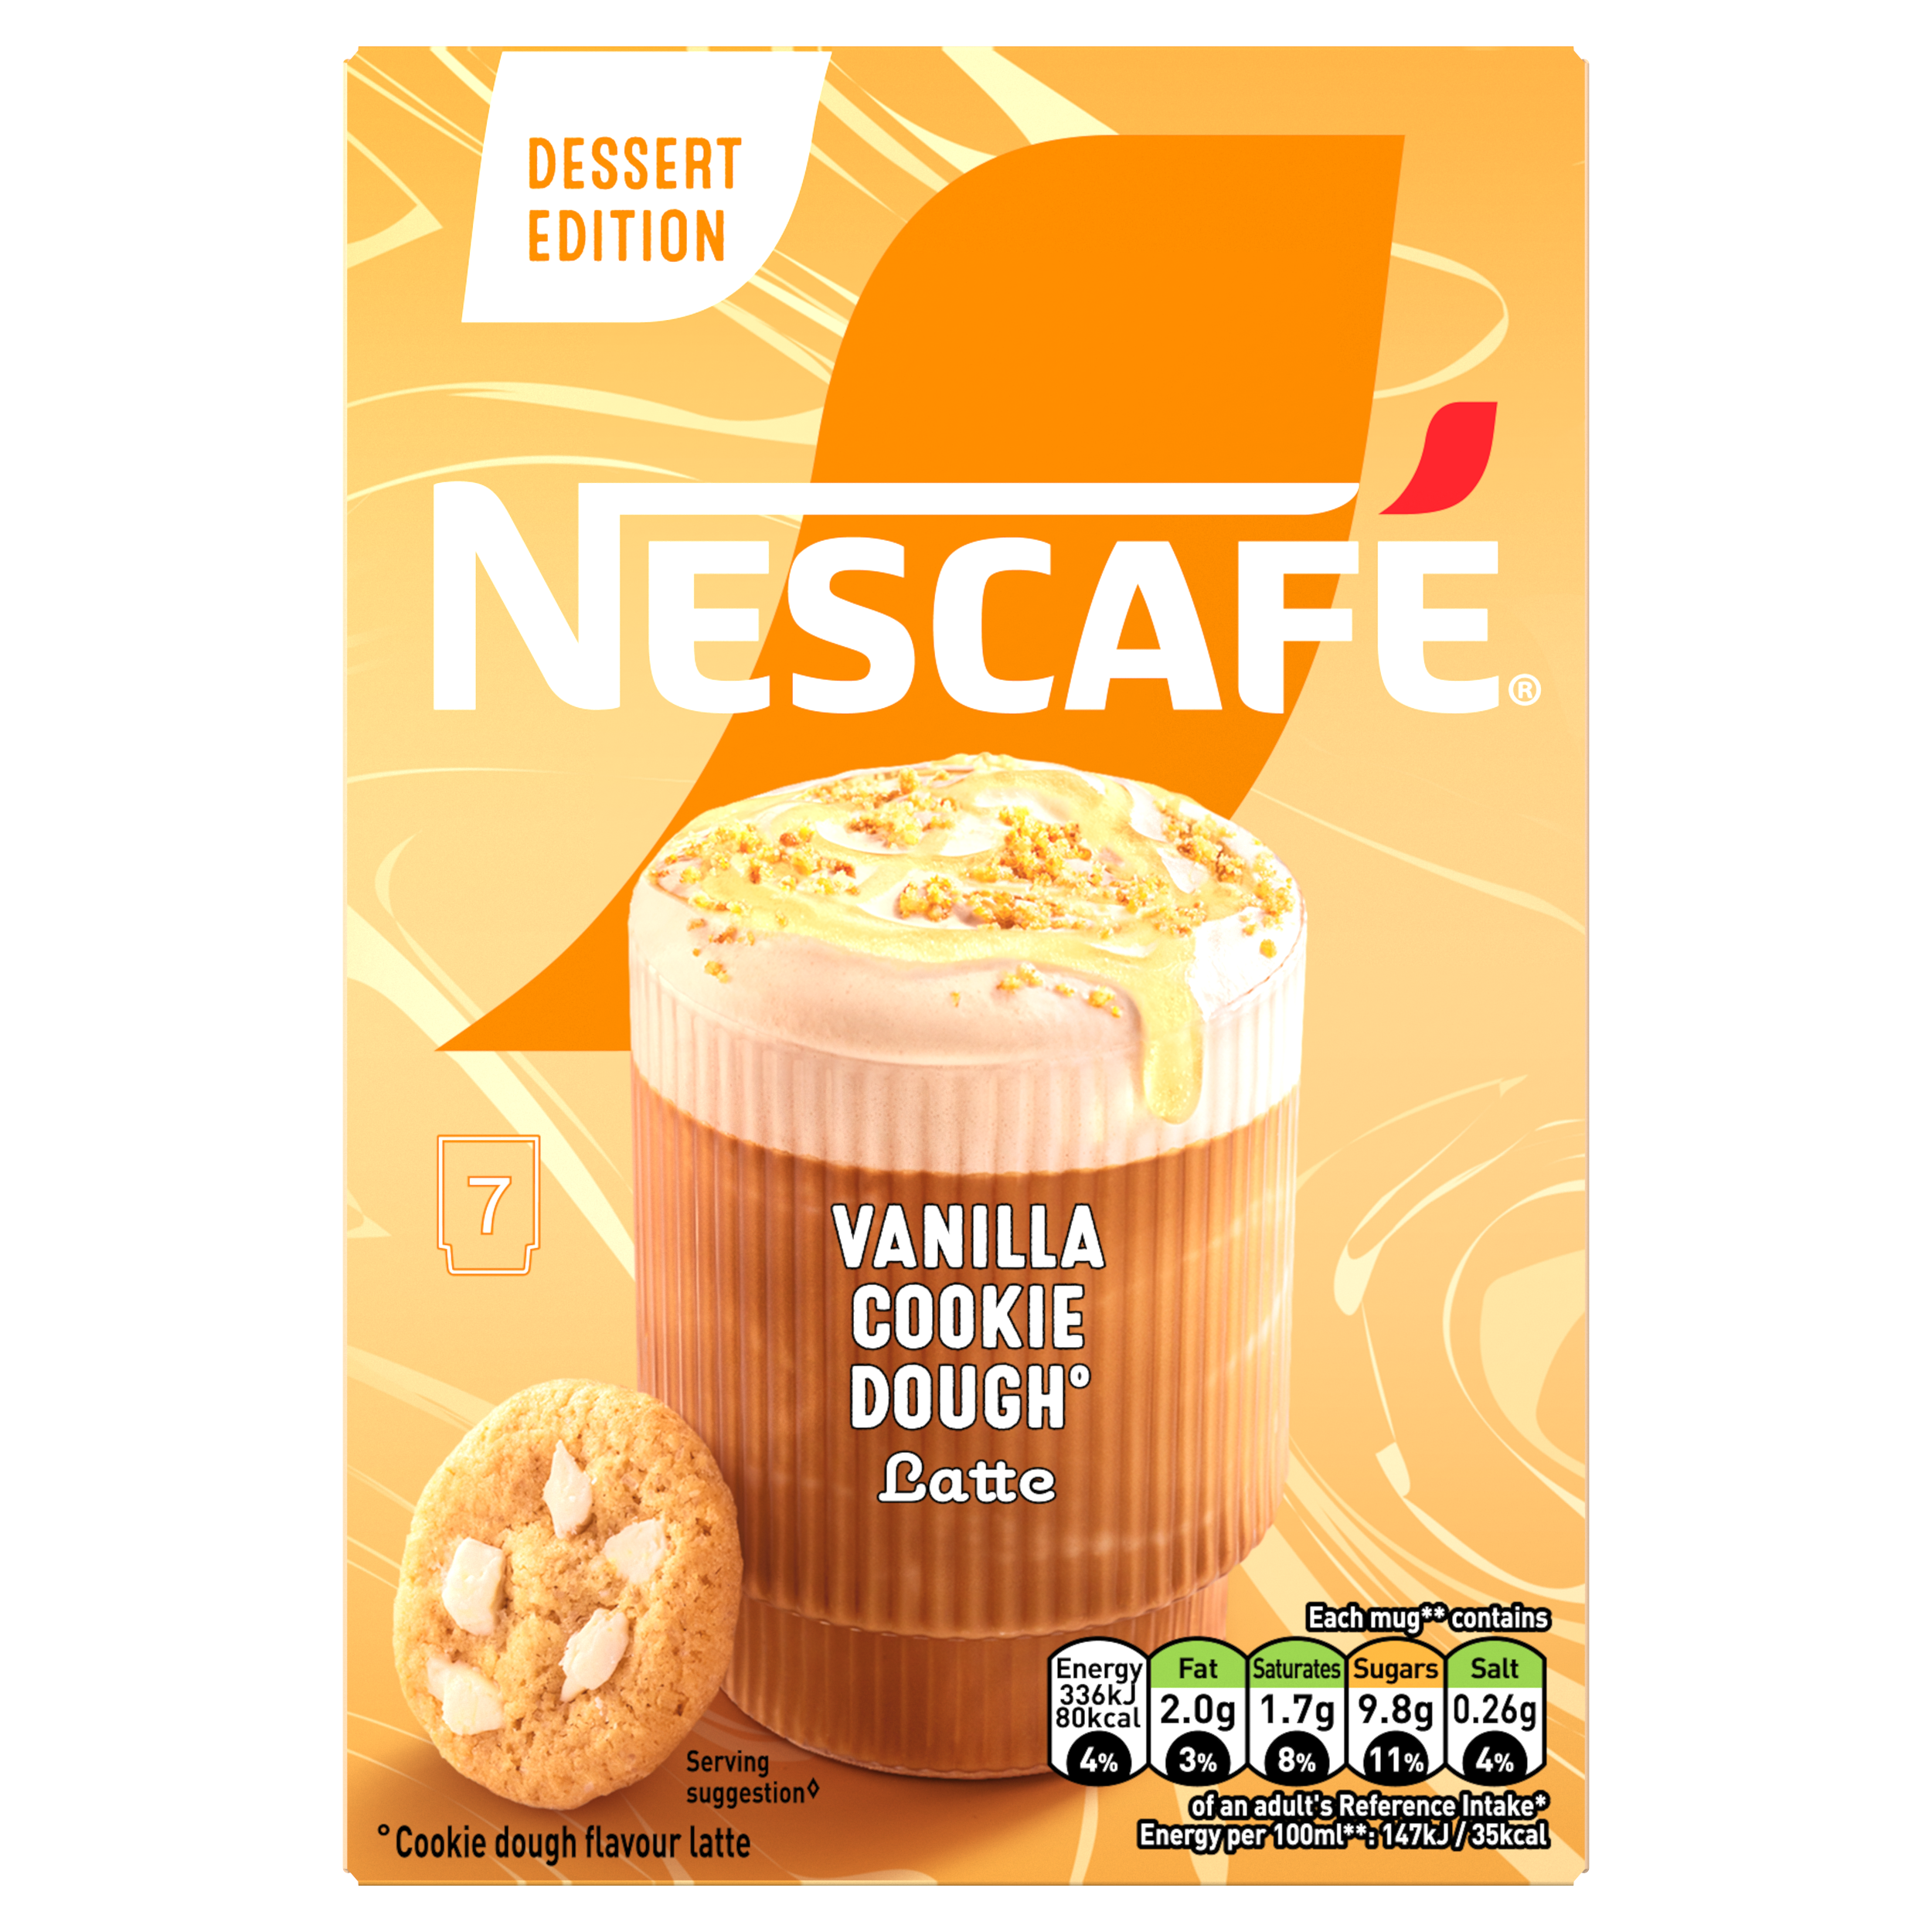 Nescafe Vanilla cookie dough